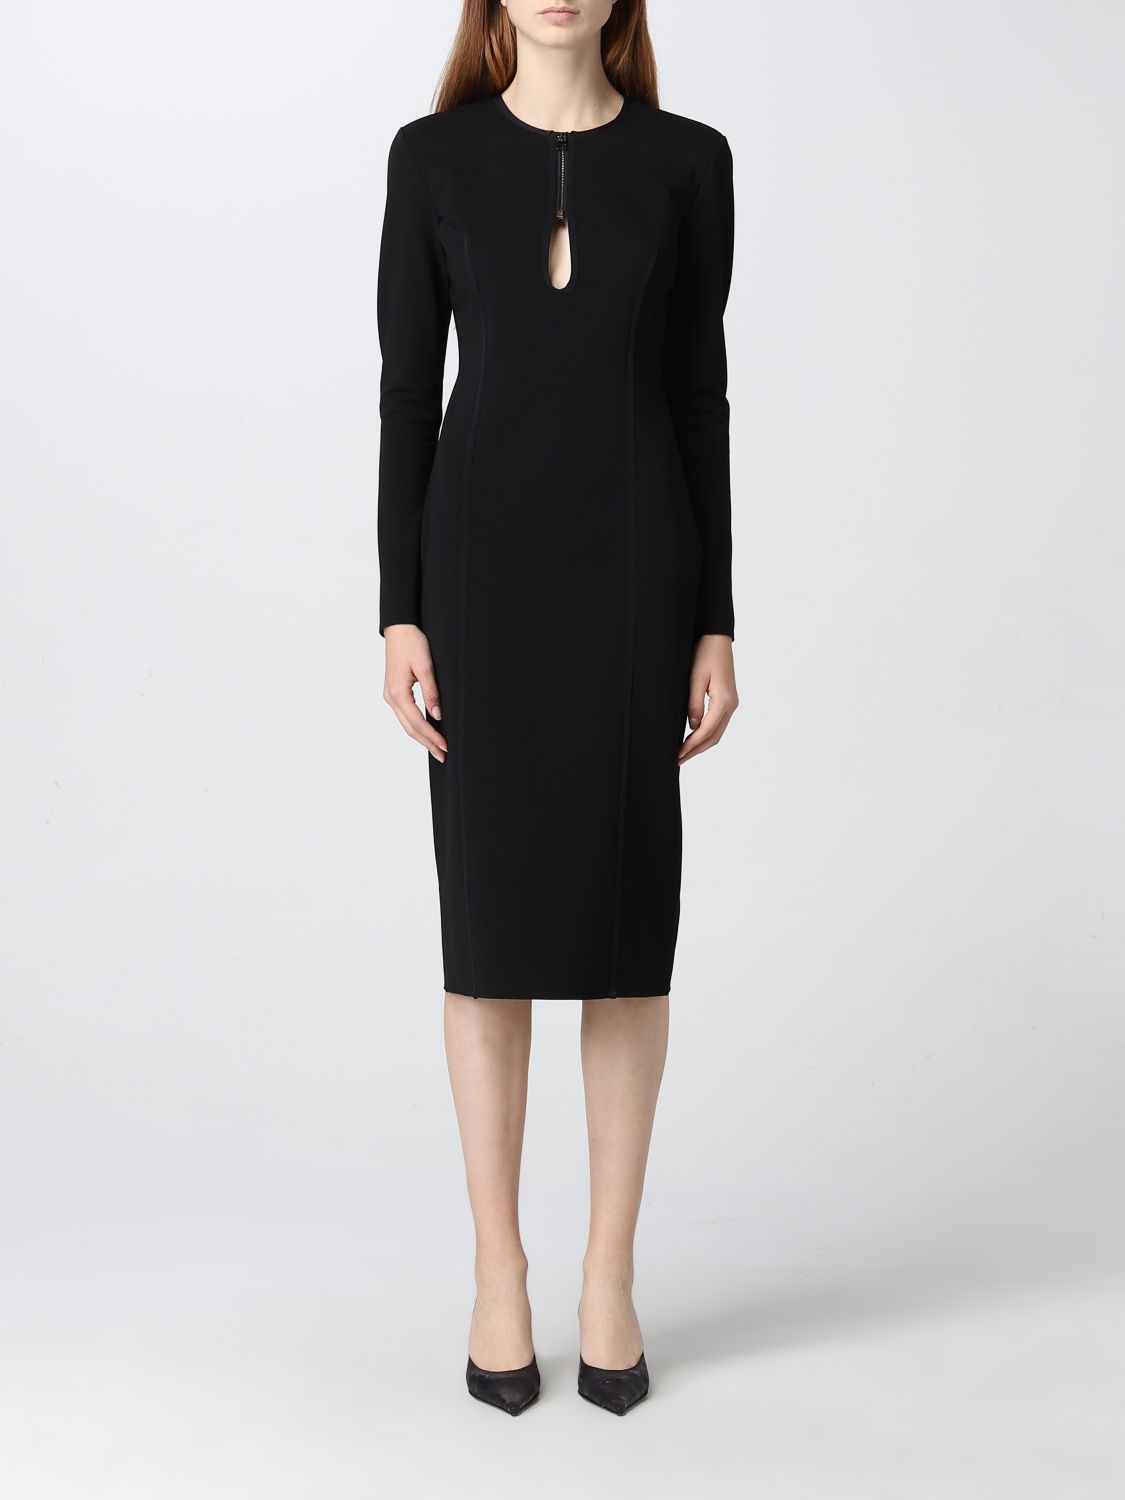 Dress Tom Ford: Tom Ford dress for woman black 1